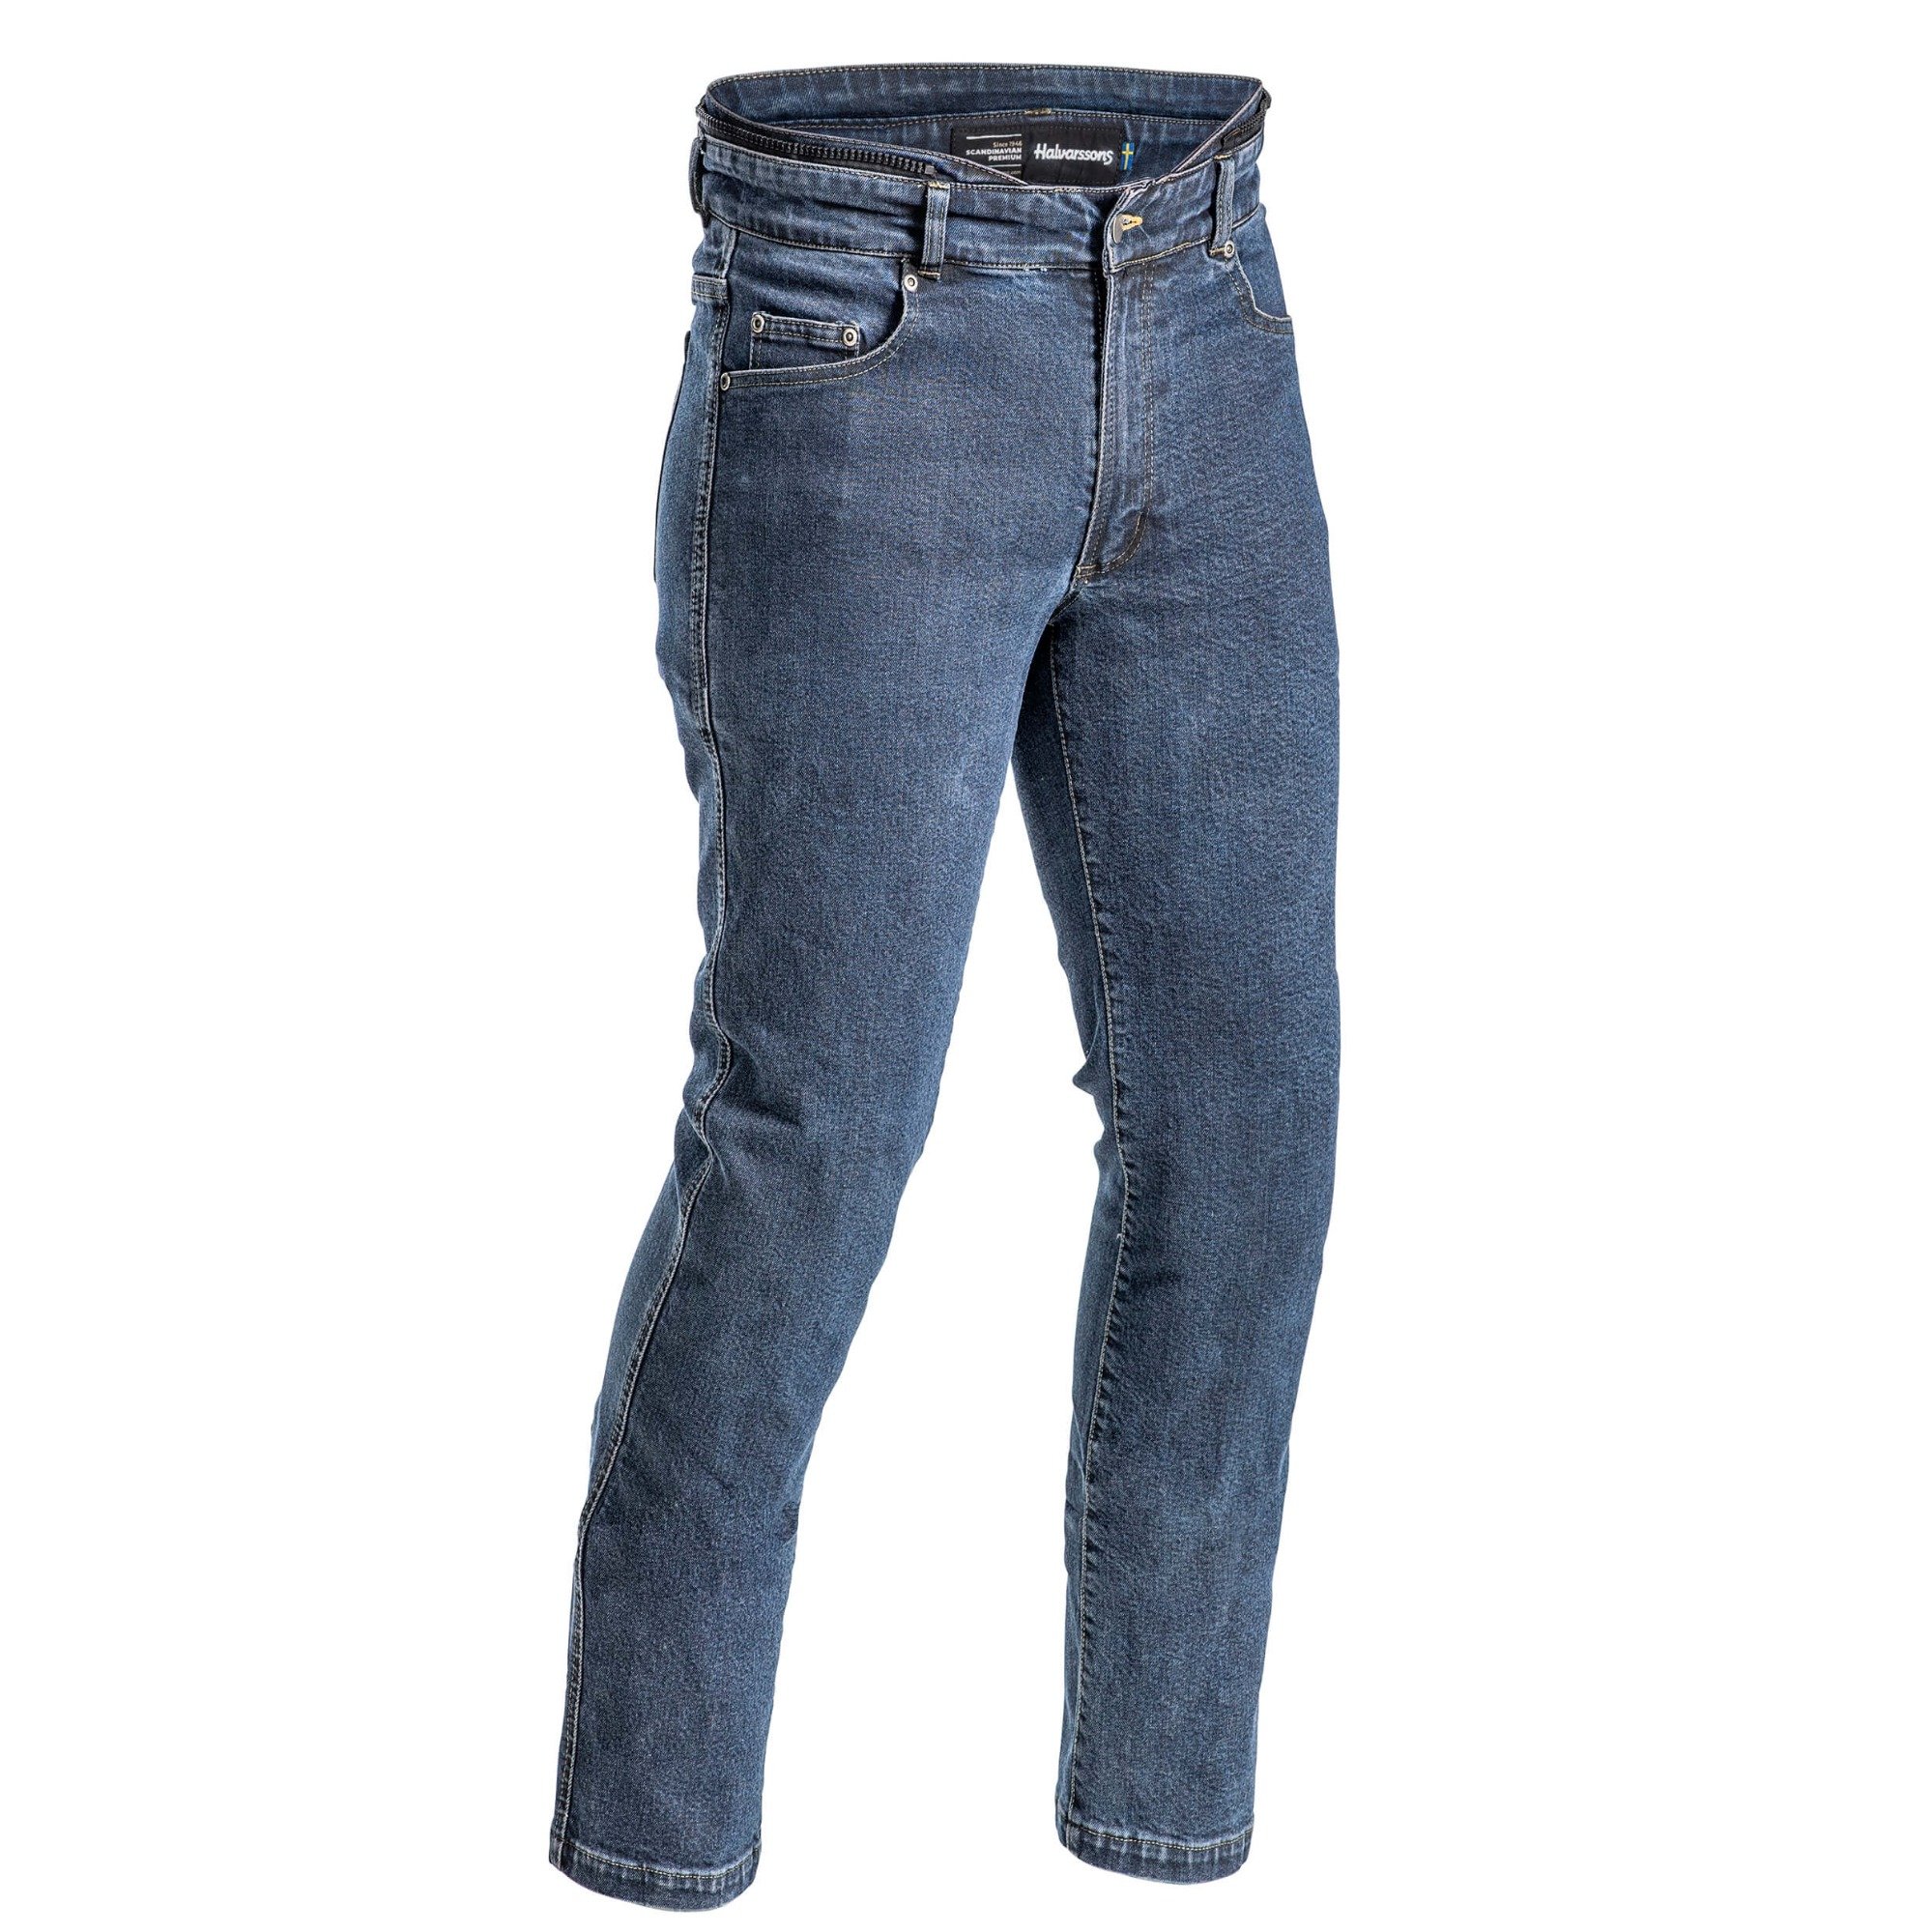 Image of Halvarssons Jeans Rogen Blue Short Size 58 ID 6438235239072